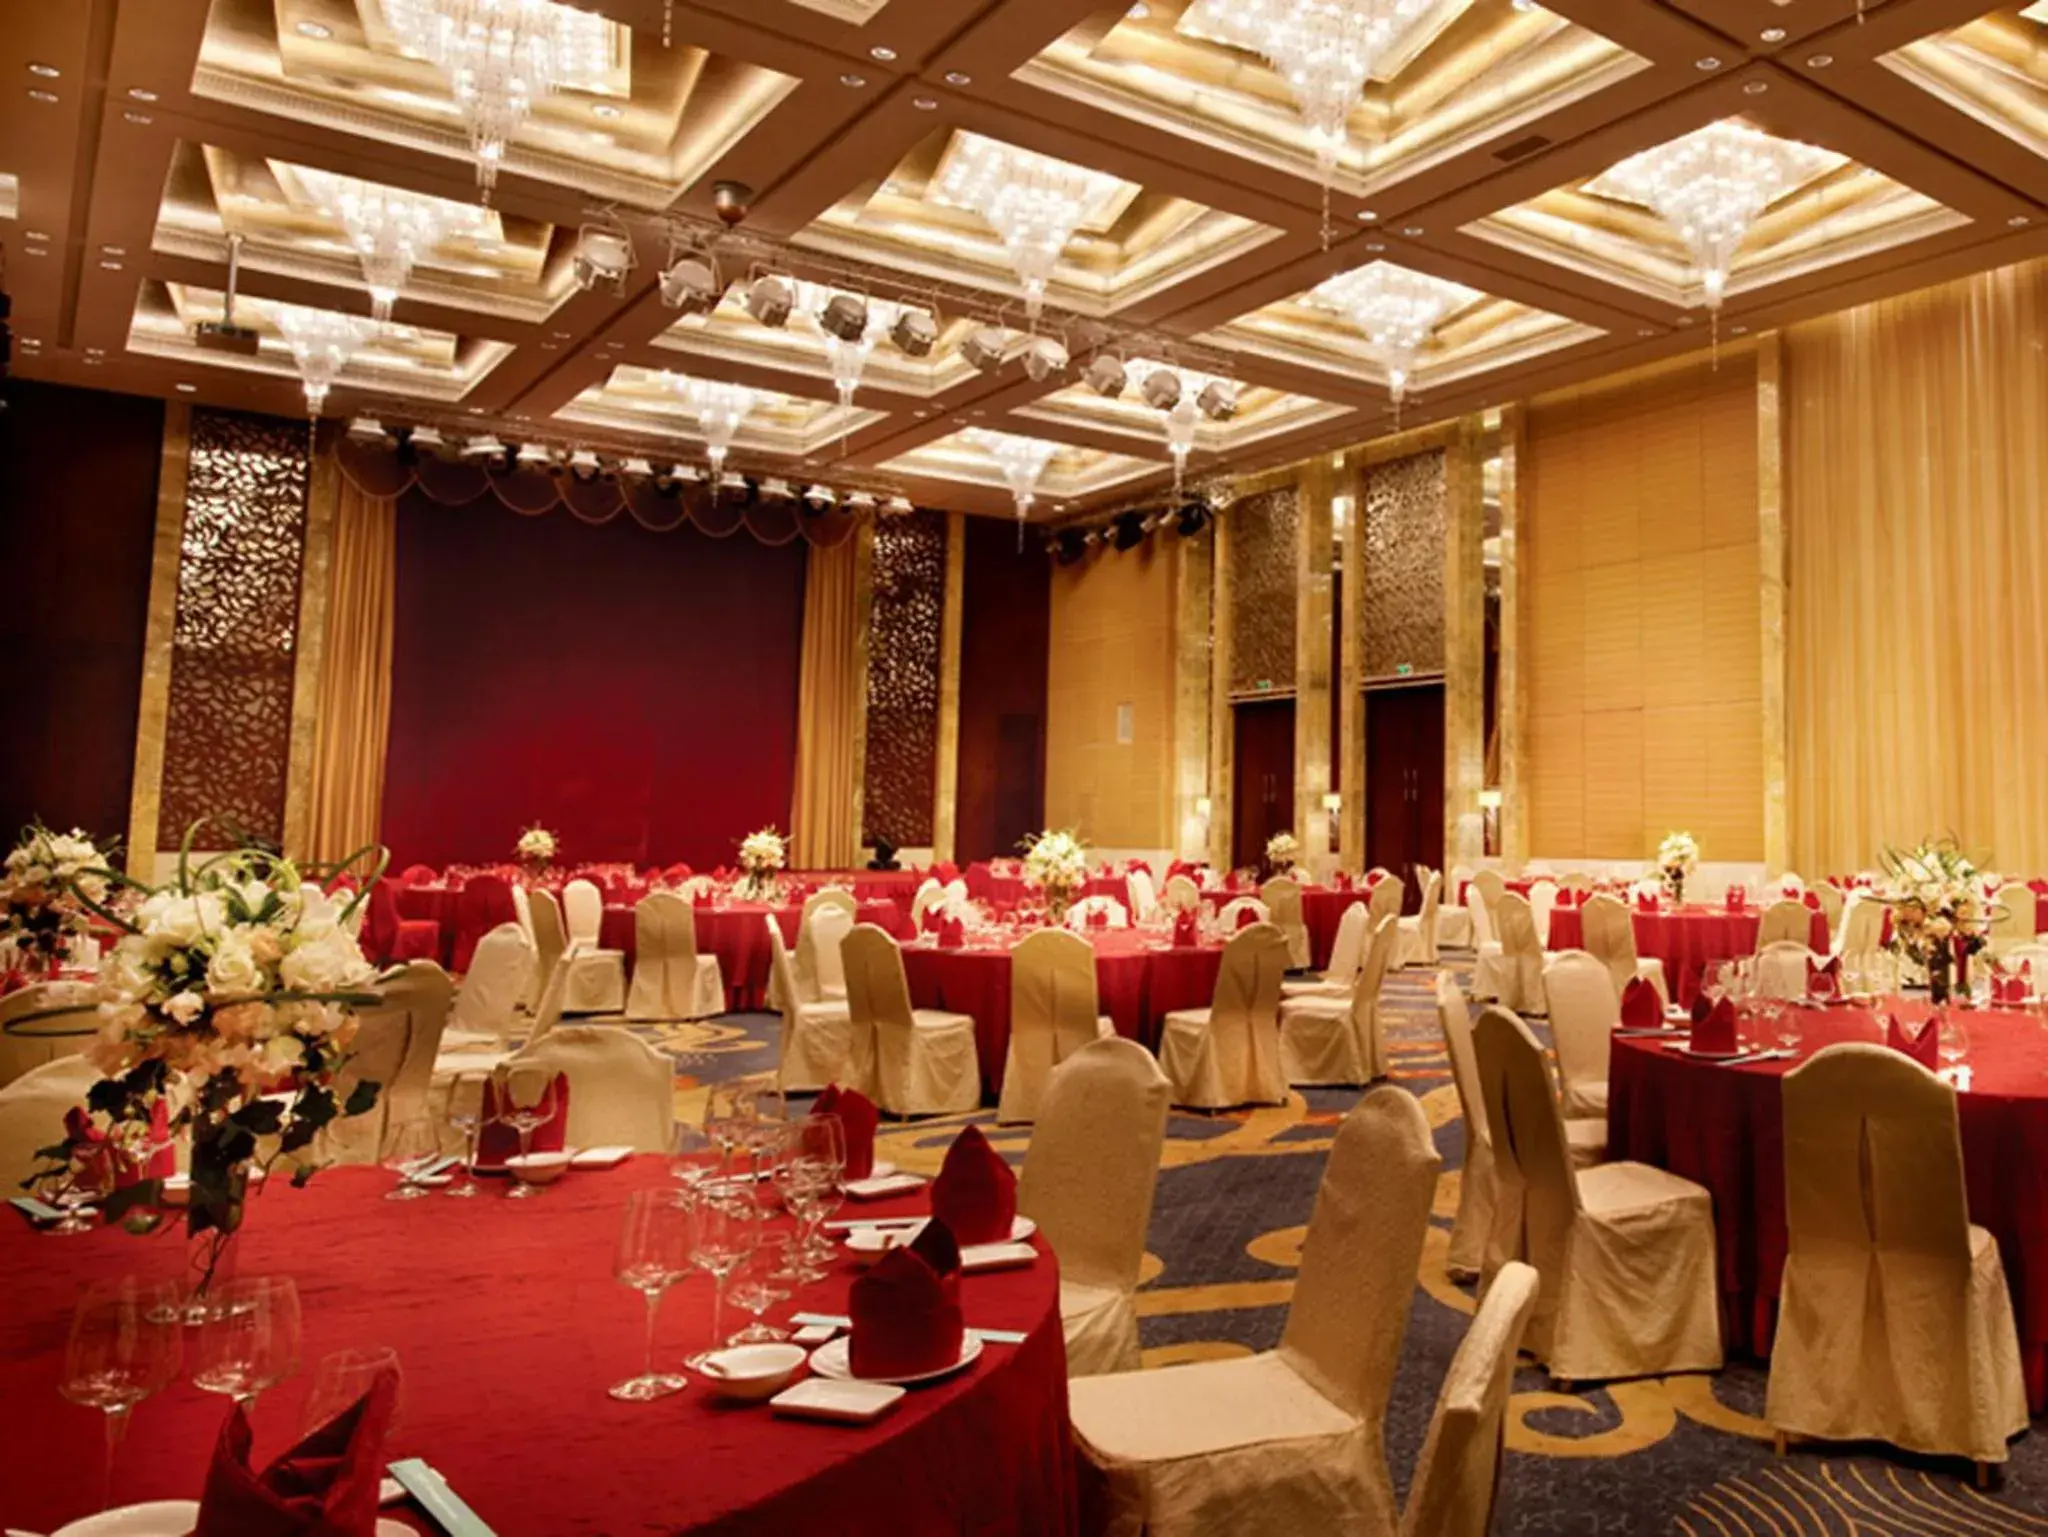 Banquet/Function facilities, Banquet Facilities in HJ International Hotel